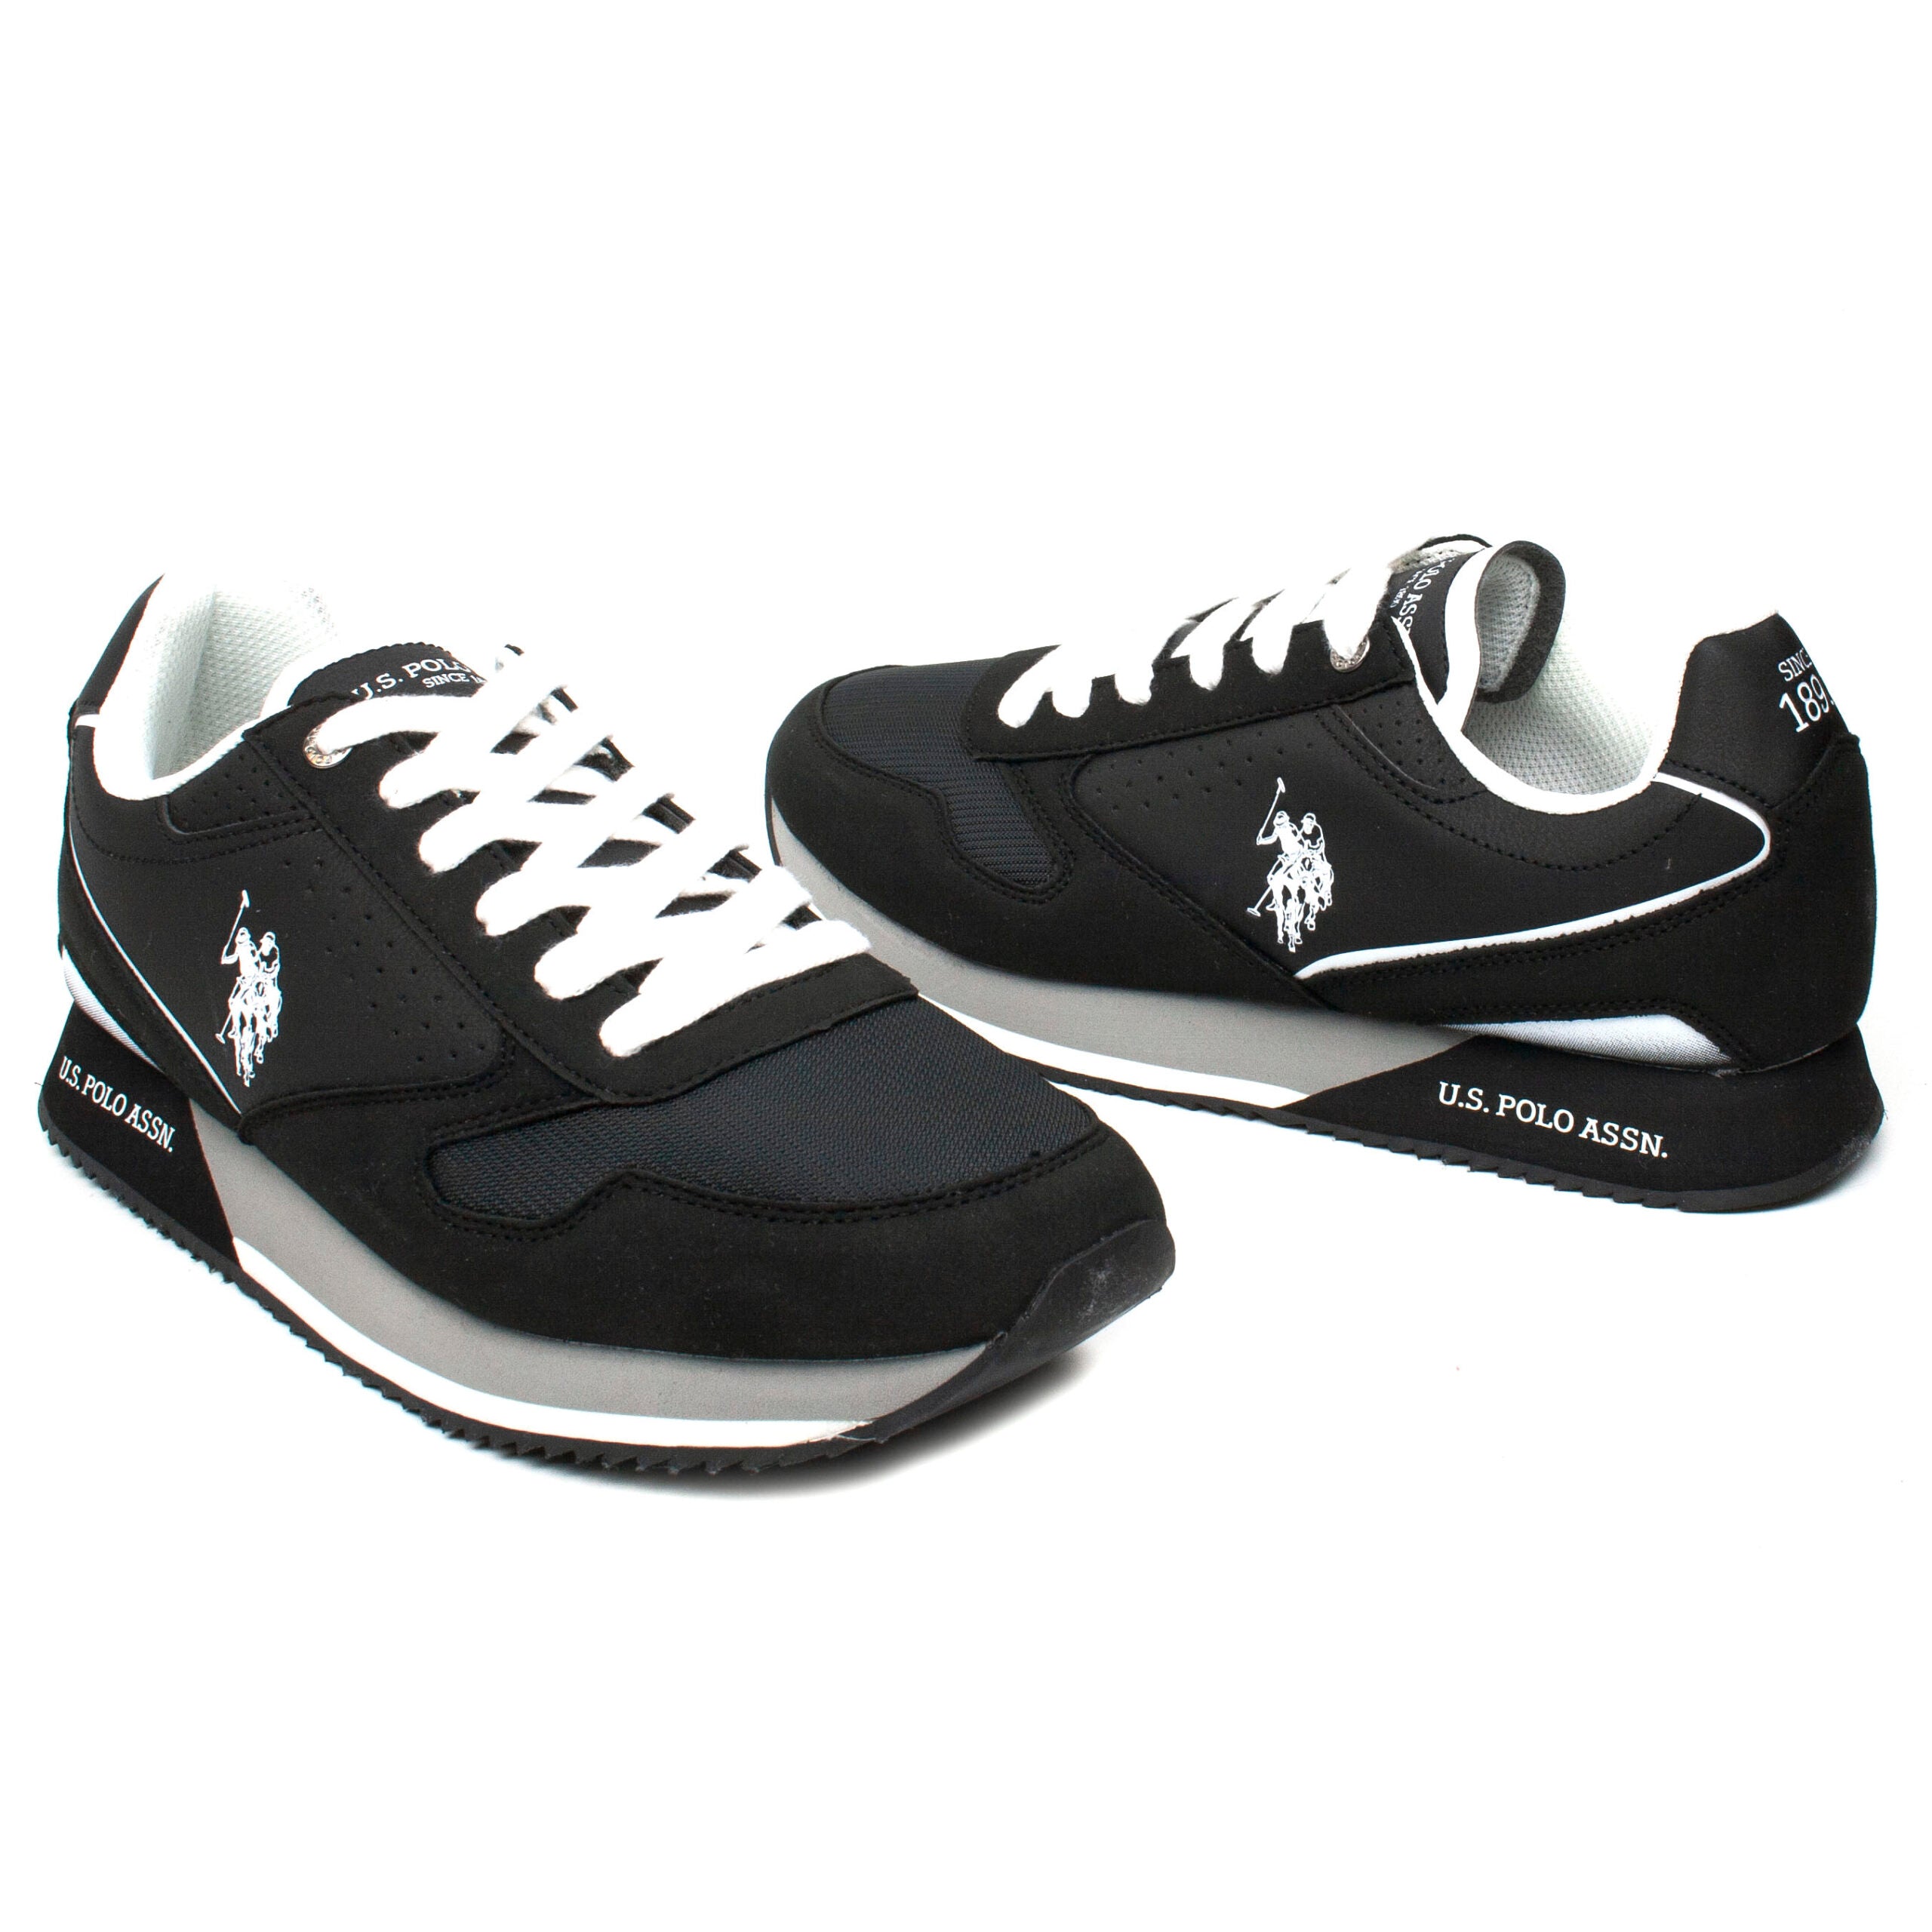 Polo pantofi sport barbati nobil negru IB2107-NG